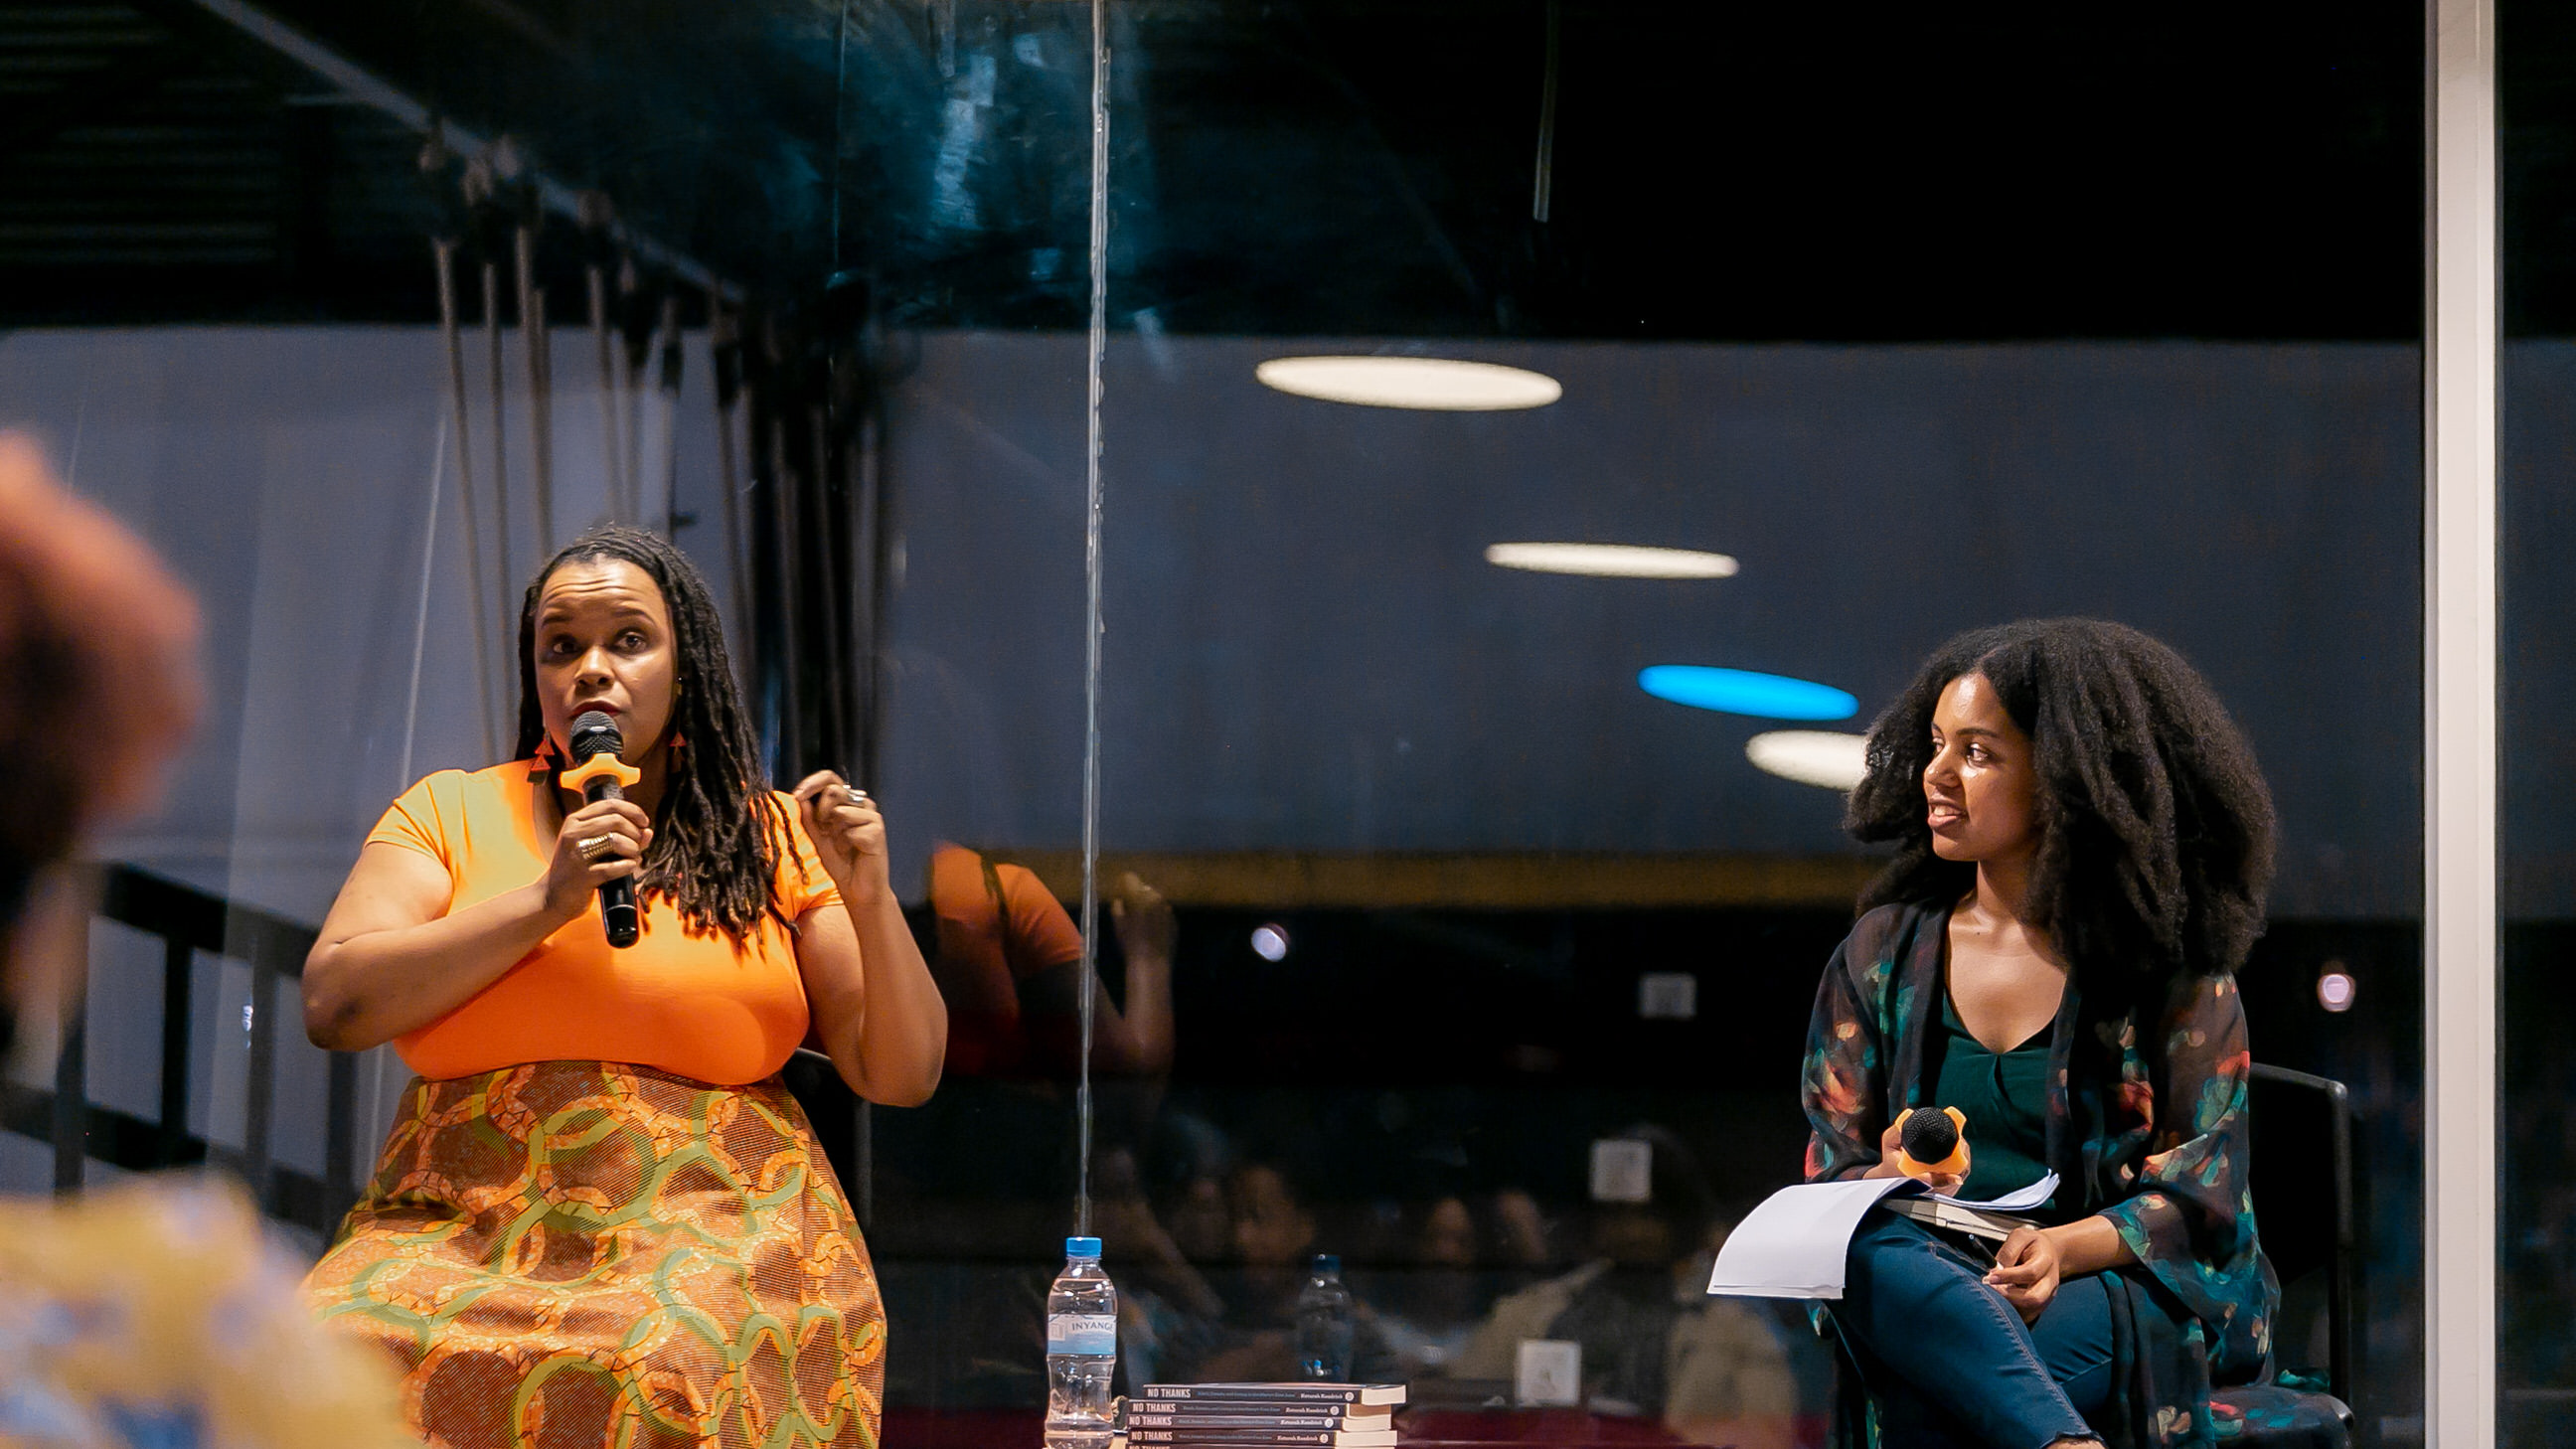 Keturah Kendrick & Marianne Mesfin Asfaw | (c) Emmanuel Rurangwa